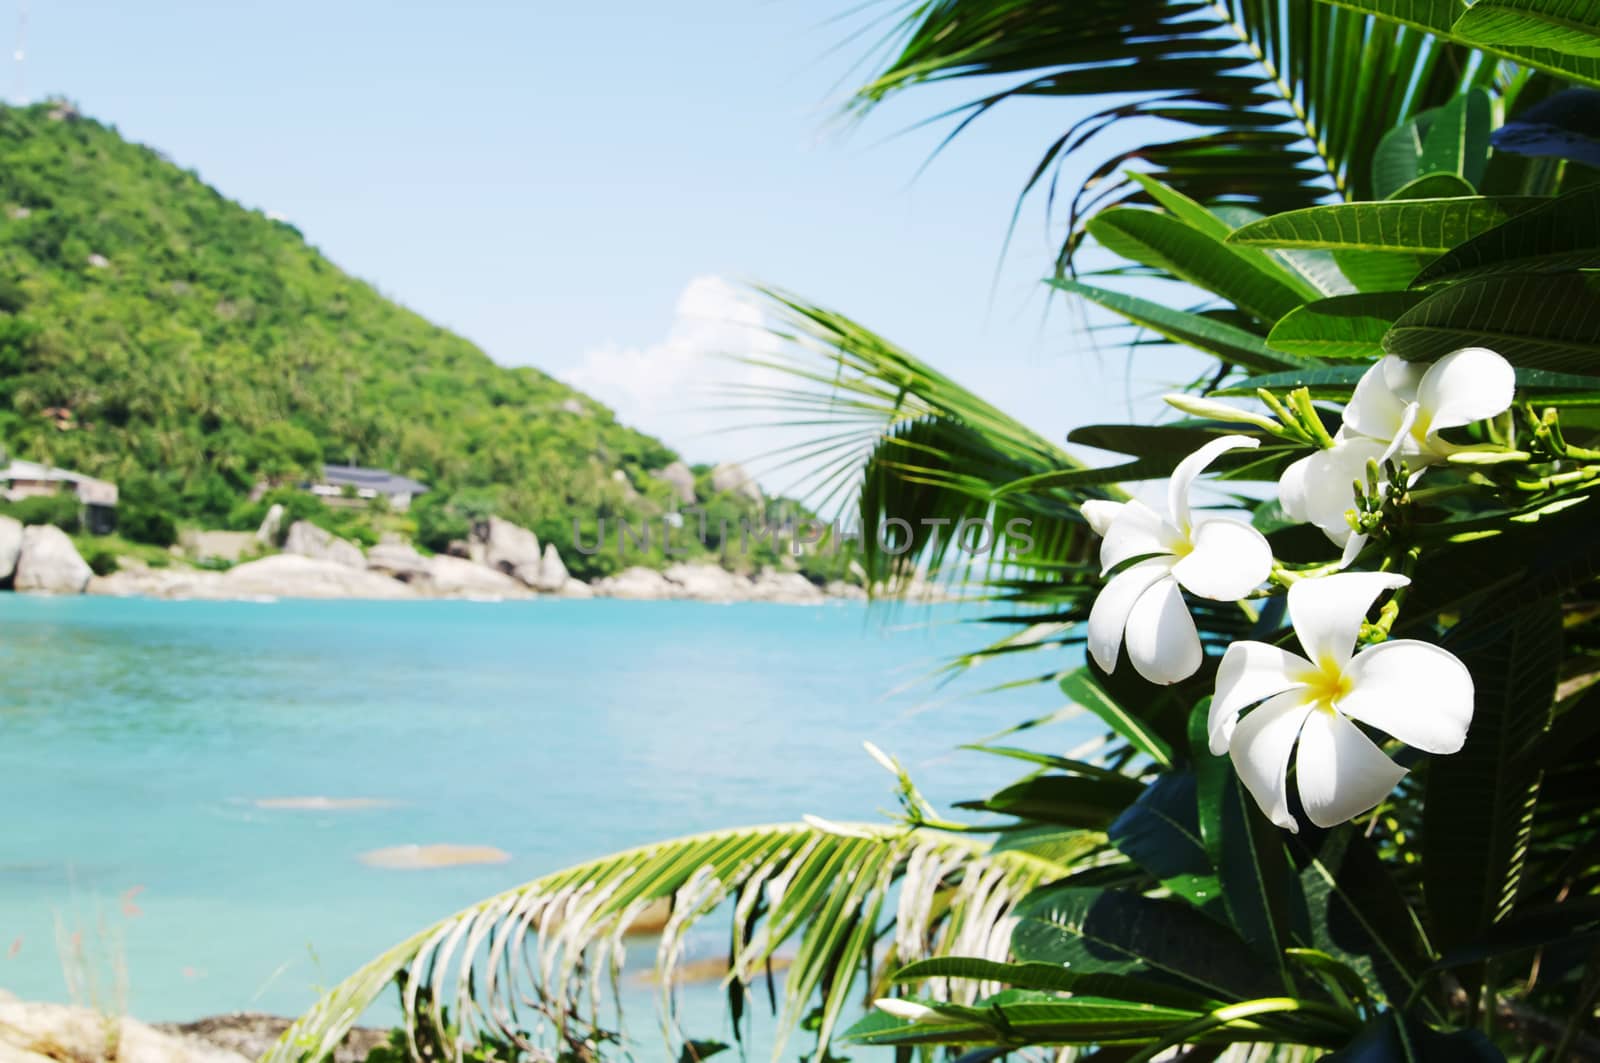 Tropical flowers frangipani against sea tropical landscape. Koh Samui, Thailand